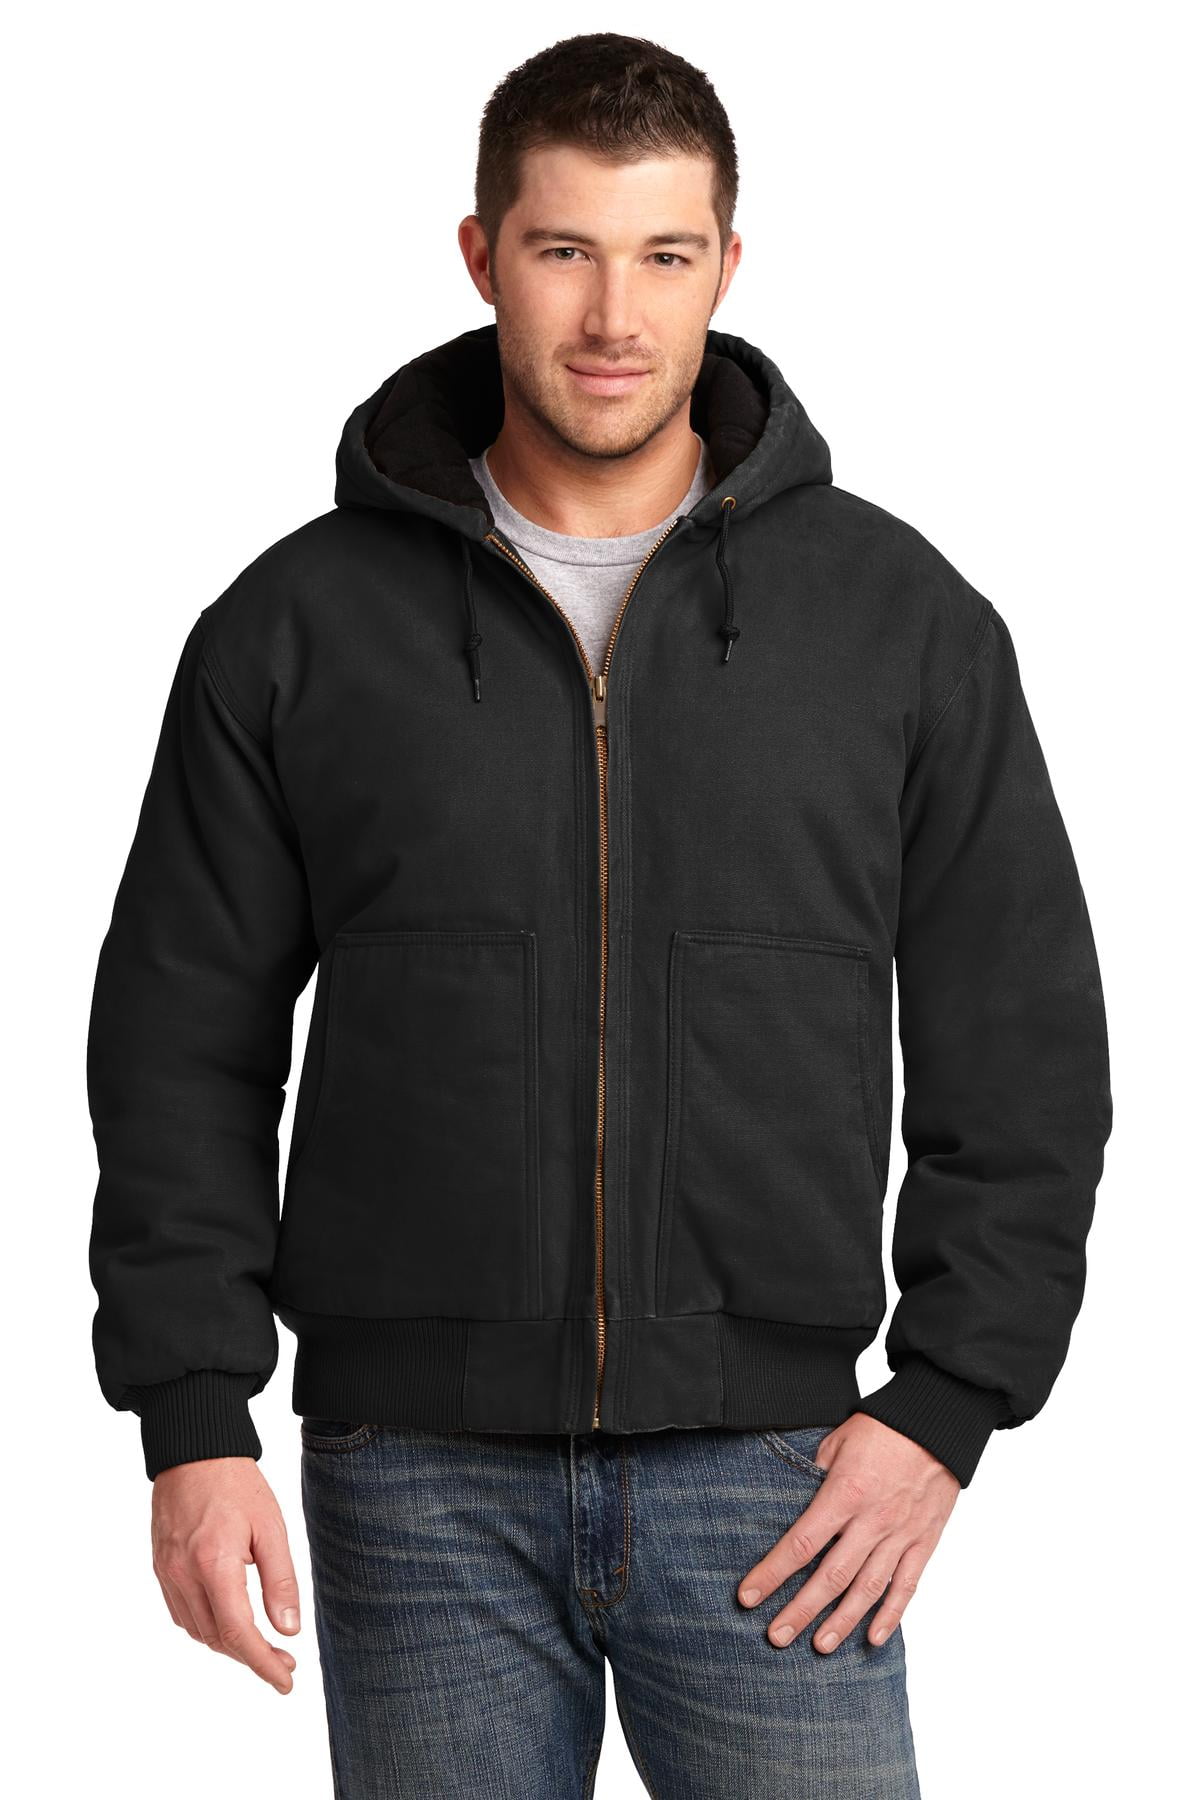 Comfortable Fabric with Zippered Hand Pockets Ultra Soft Warm Swiss Alps Kids Boy's Full Zip Polar Fleece Jacket